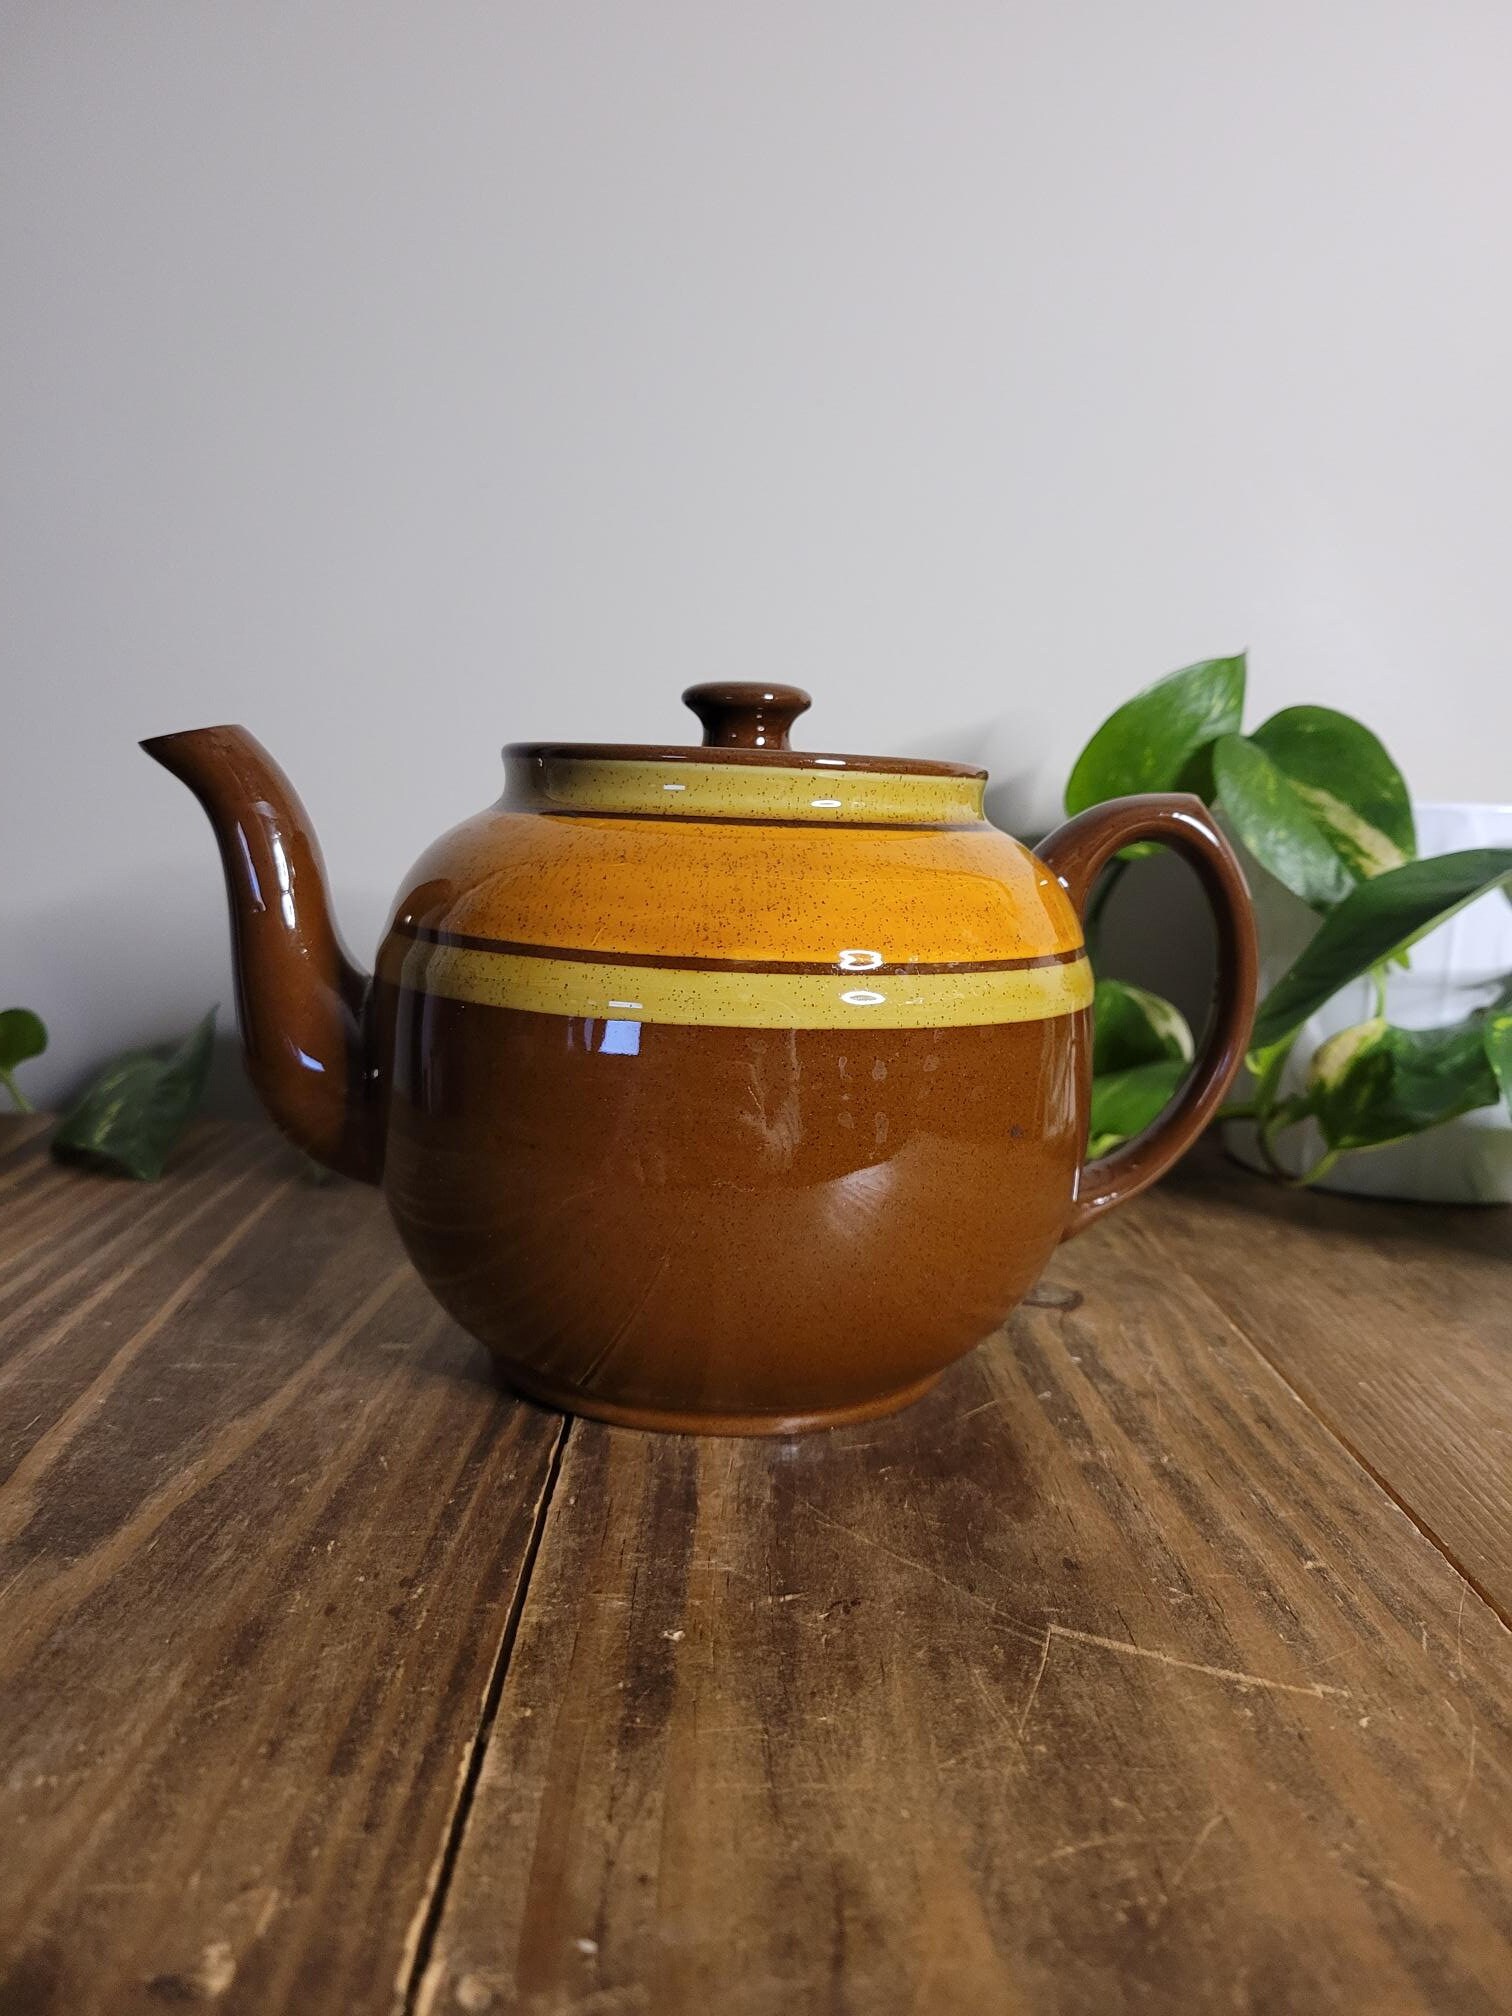 Brown Betty Teapot – Simpson & Vail